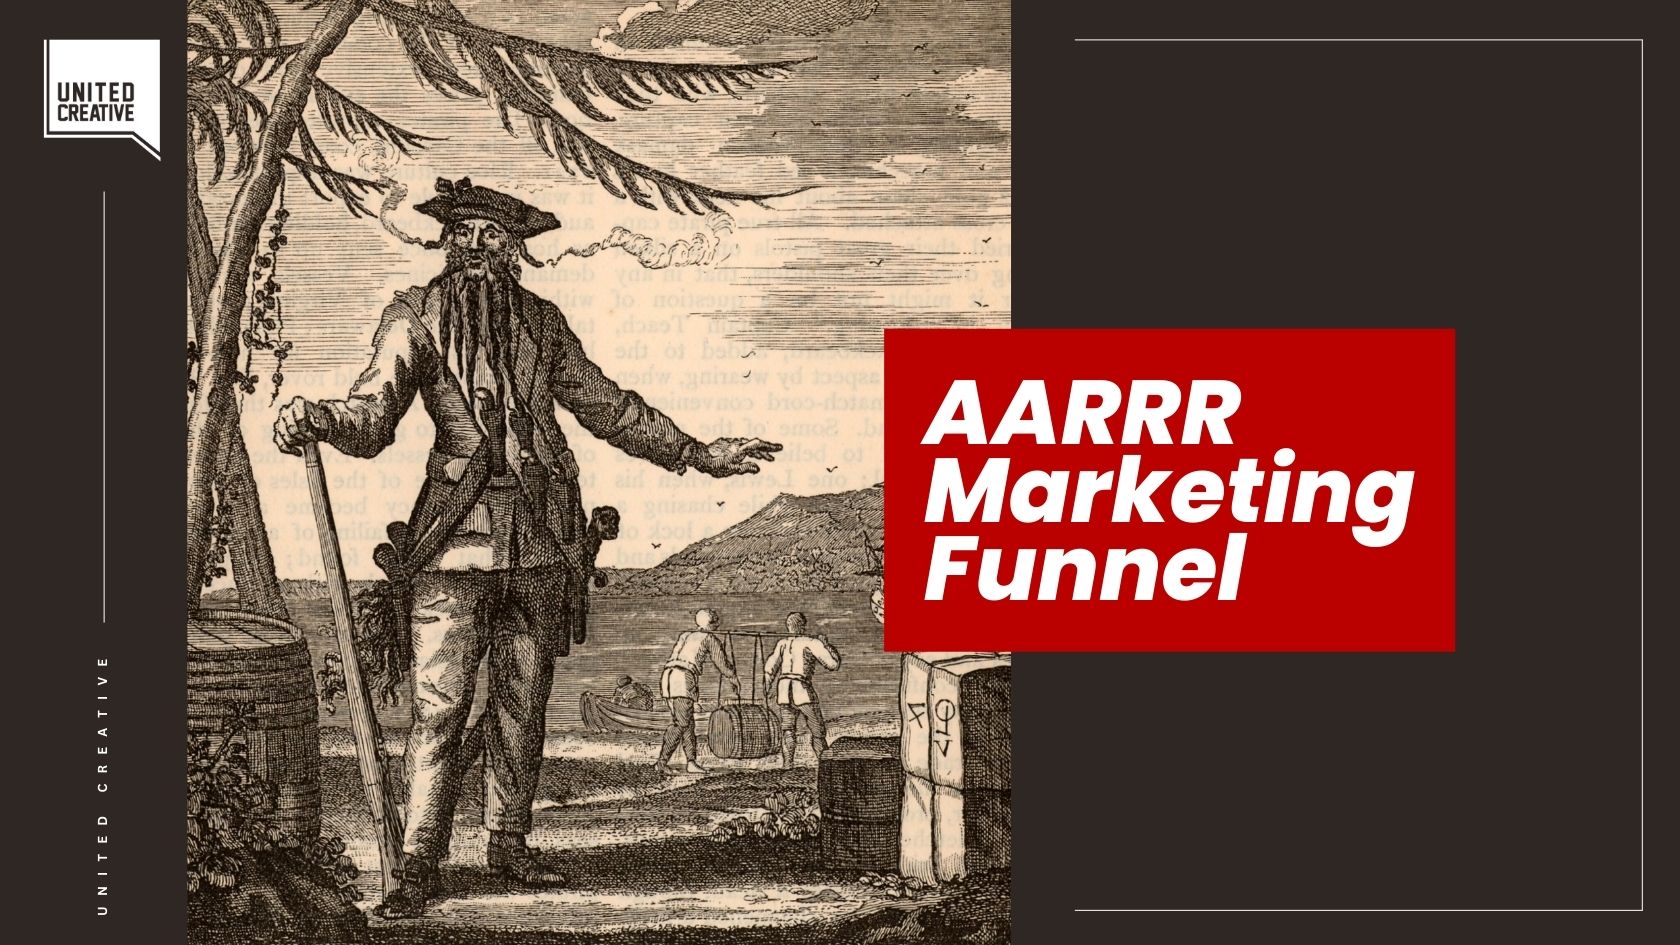 Memahami Marketing Funnel Pirate atau AARRR